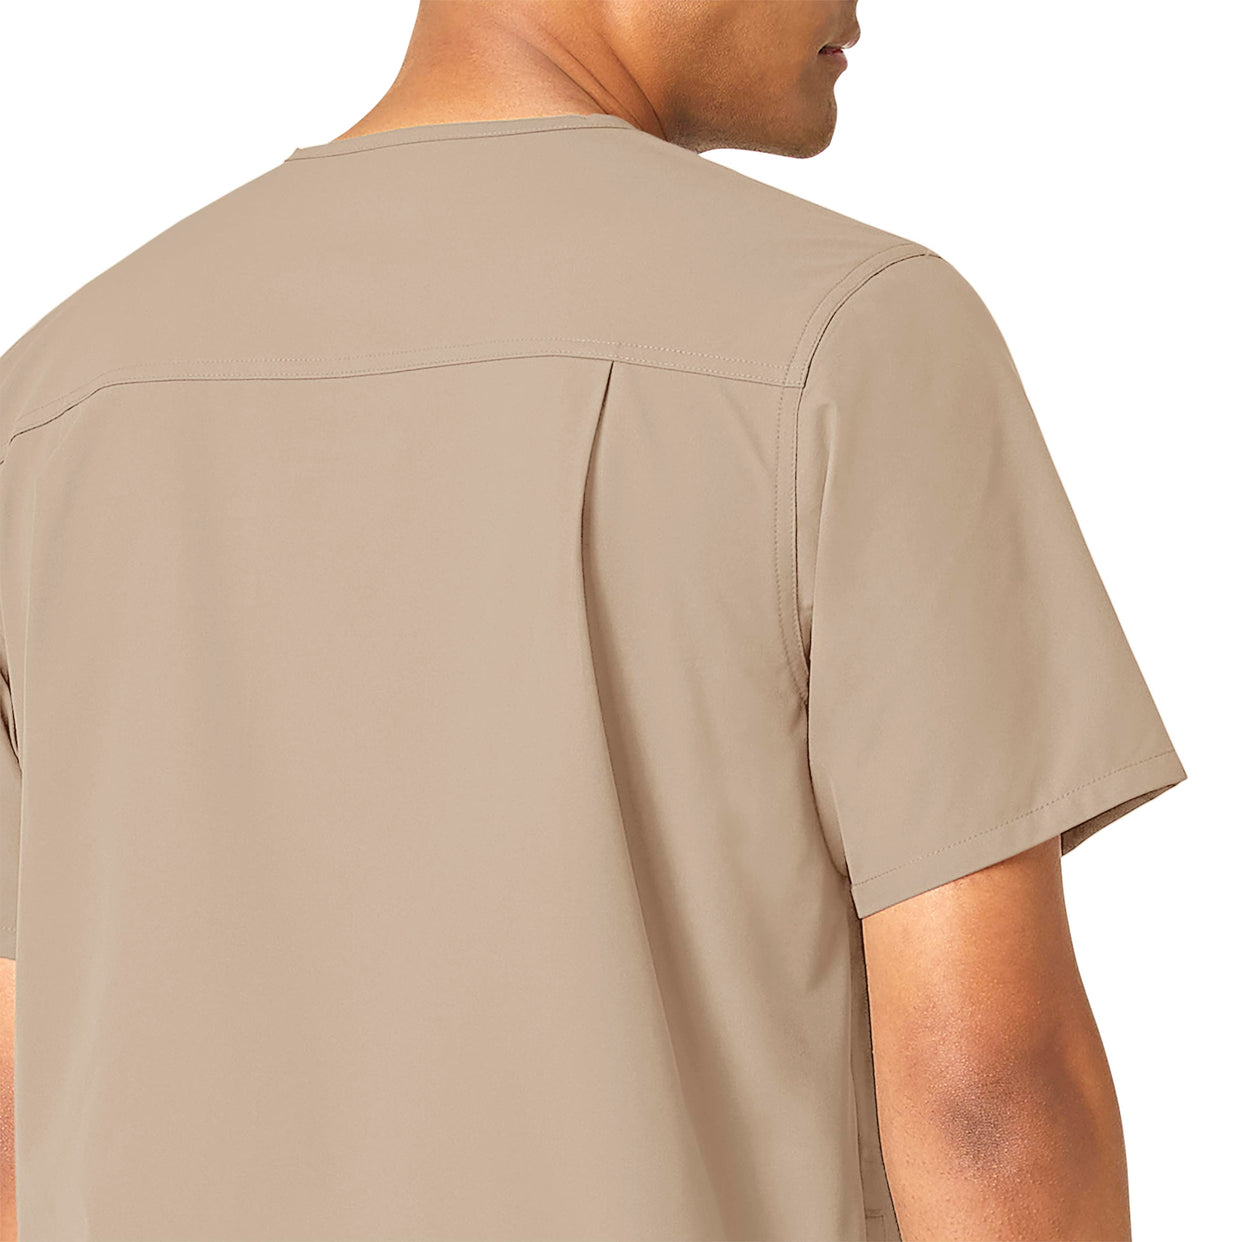 Force Essentials Men's V-Neck Shirttail Scrub Top Khaki side detail 1